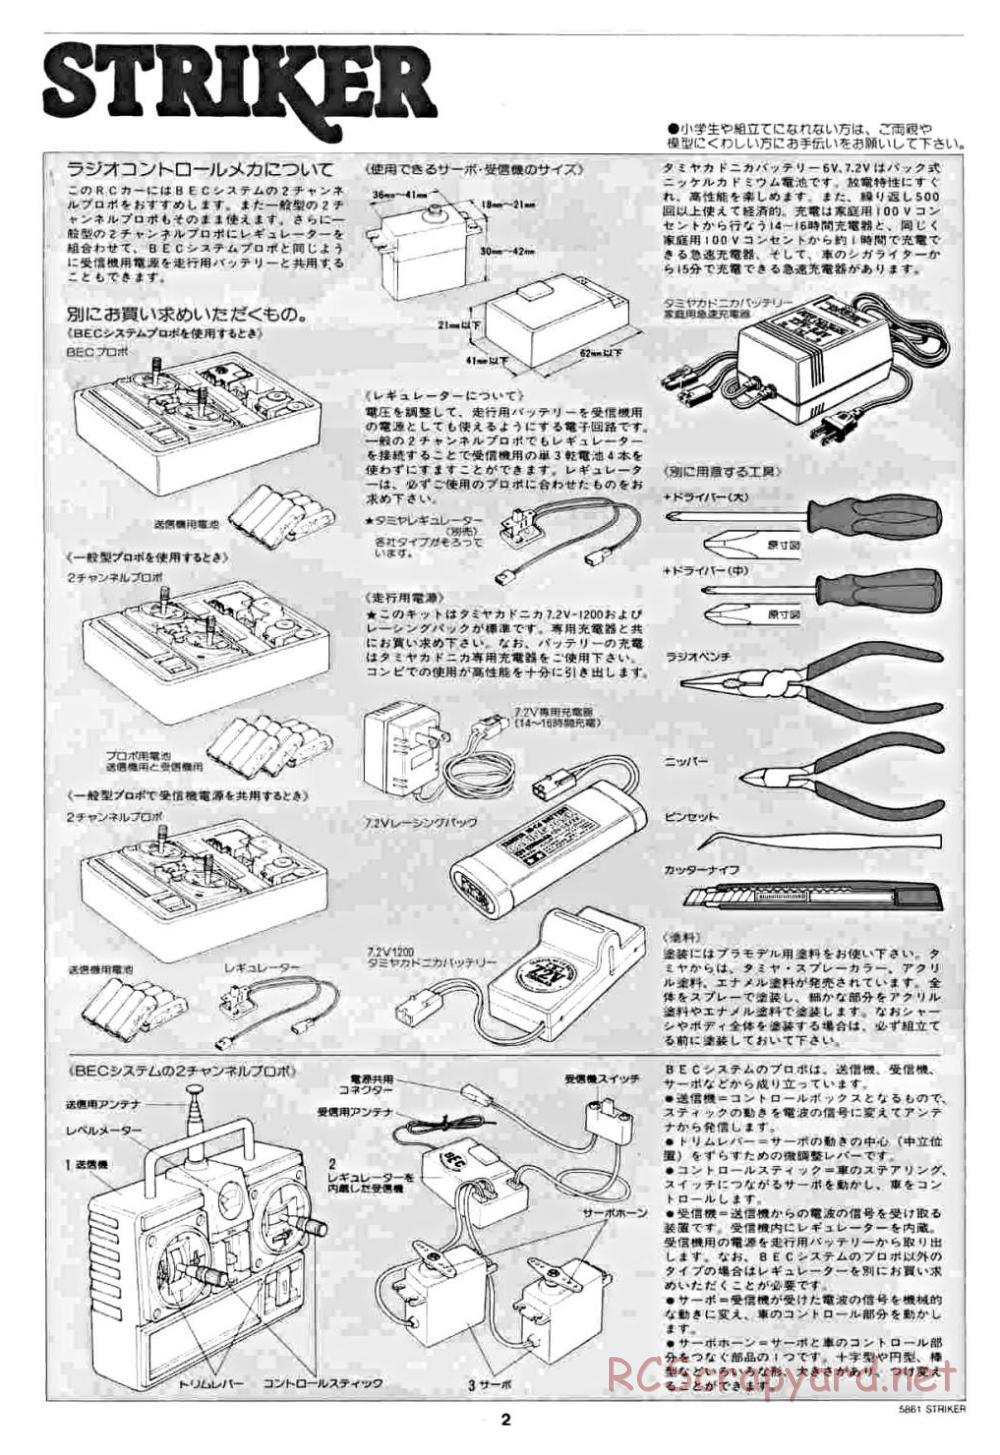 Tamiya - Striker - 58061 - Manual - Page 2